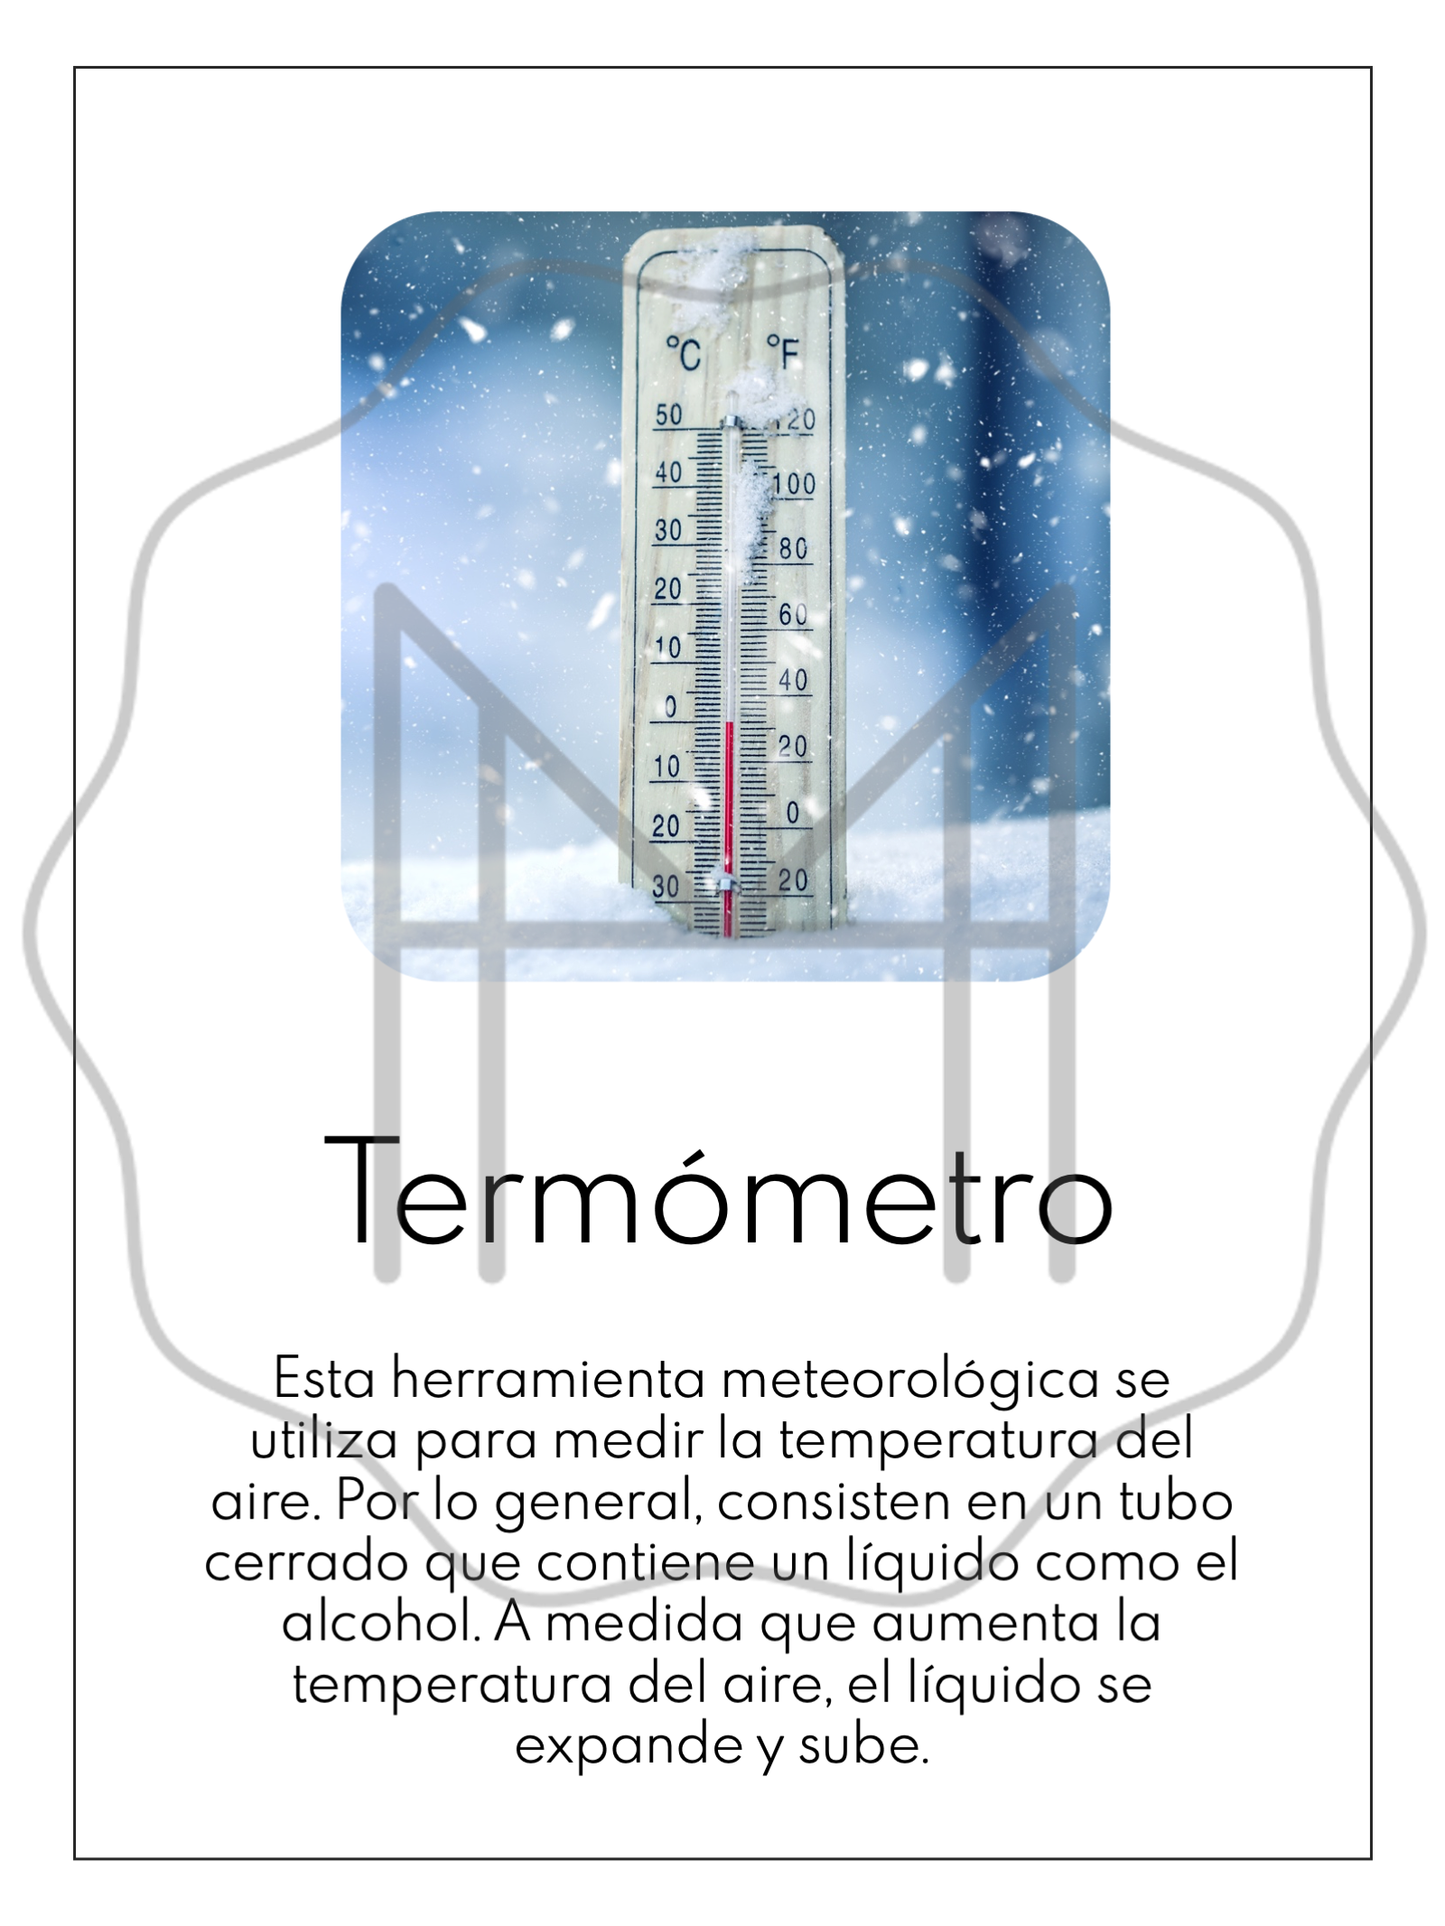 Español - Herramientas meteorológicas - Materiales